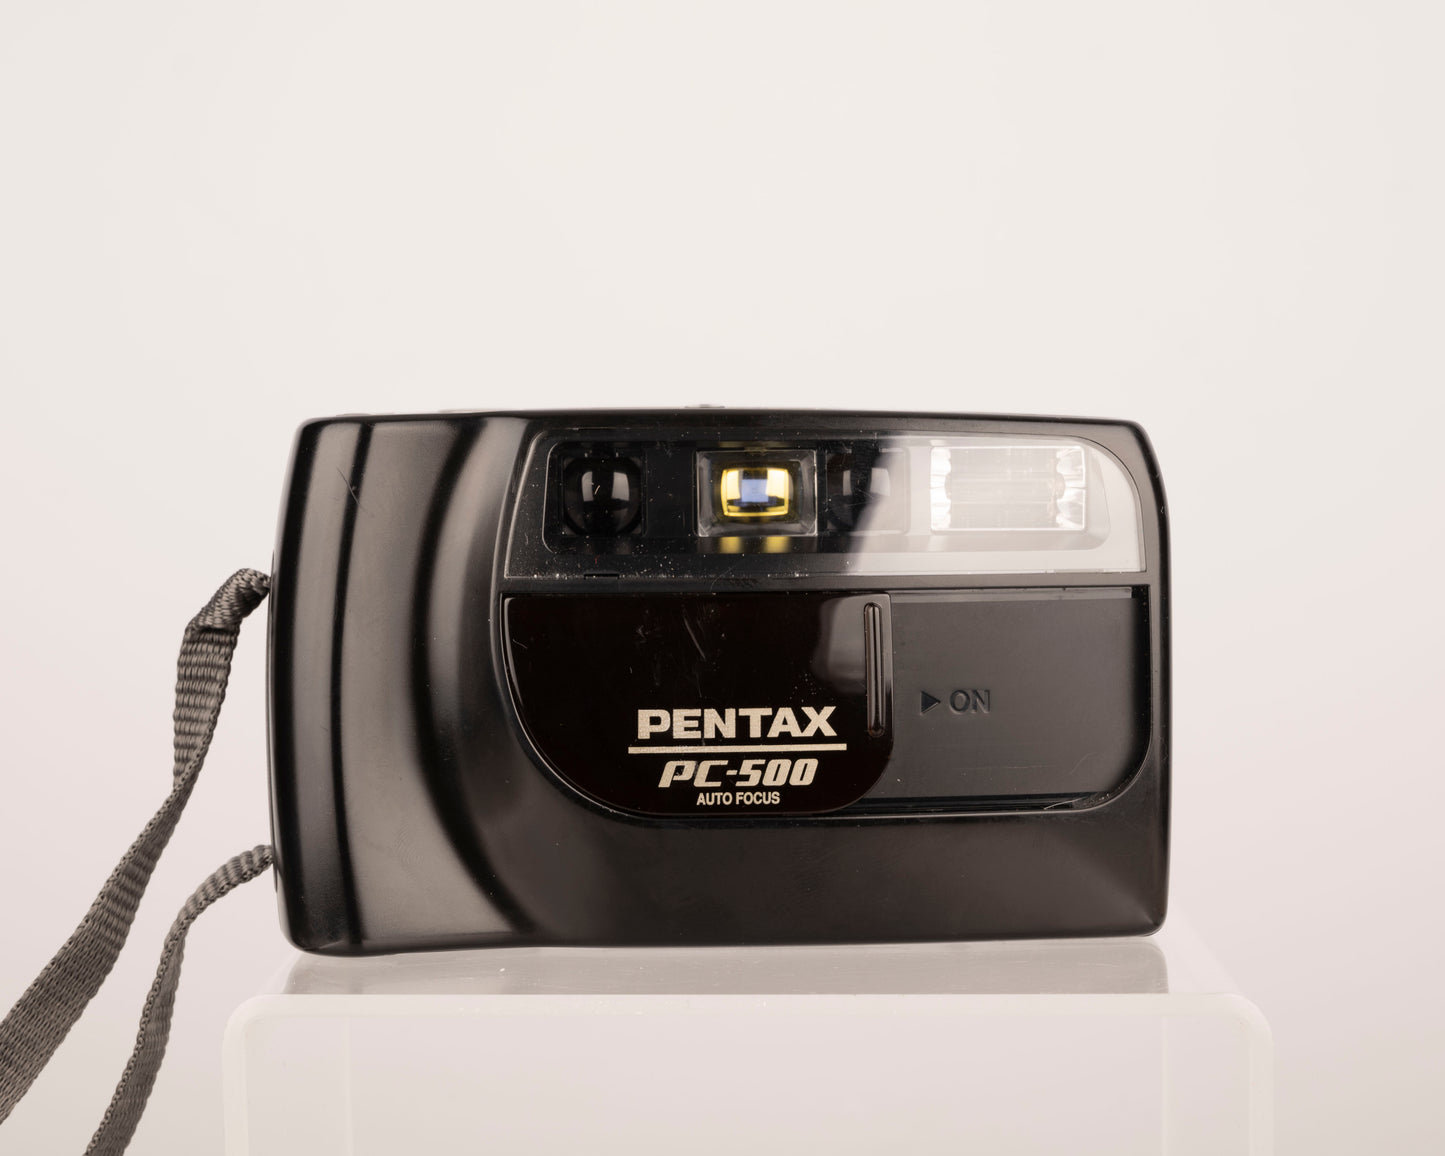 Appareil photo Pentax PC-500 compact 35 mm (série 7663962)